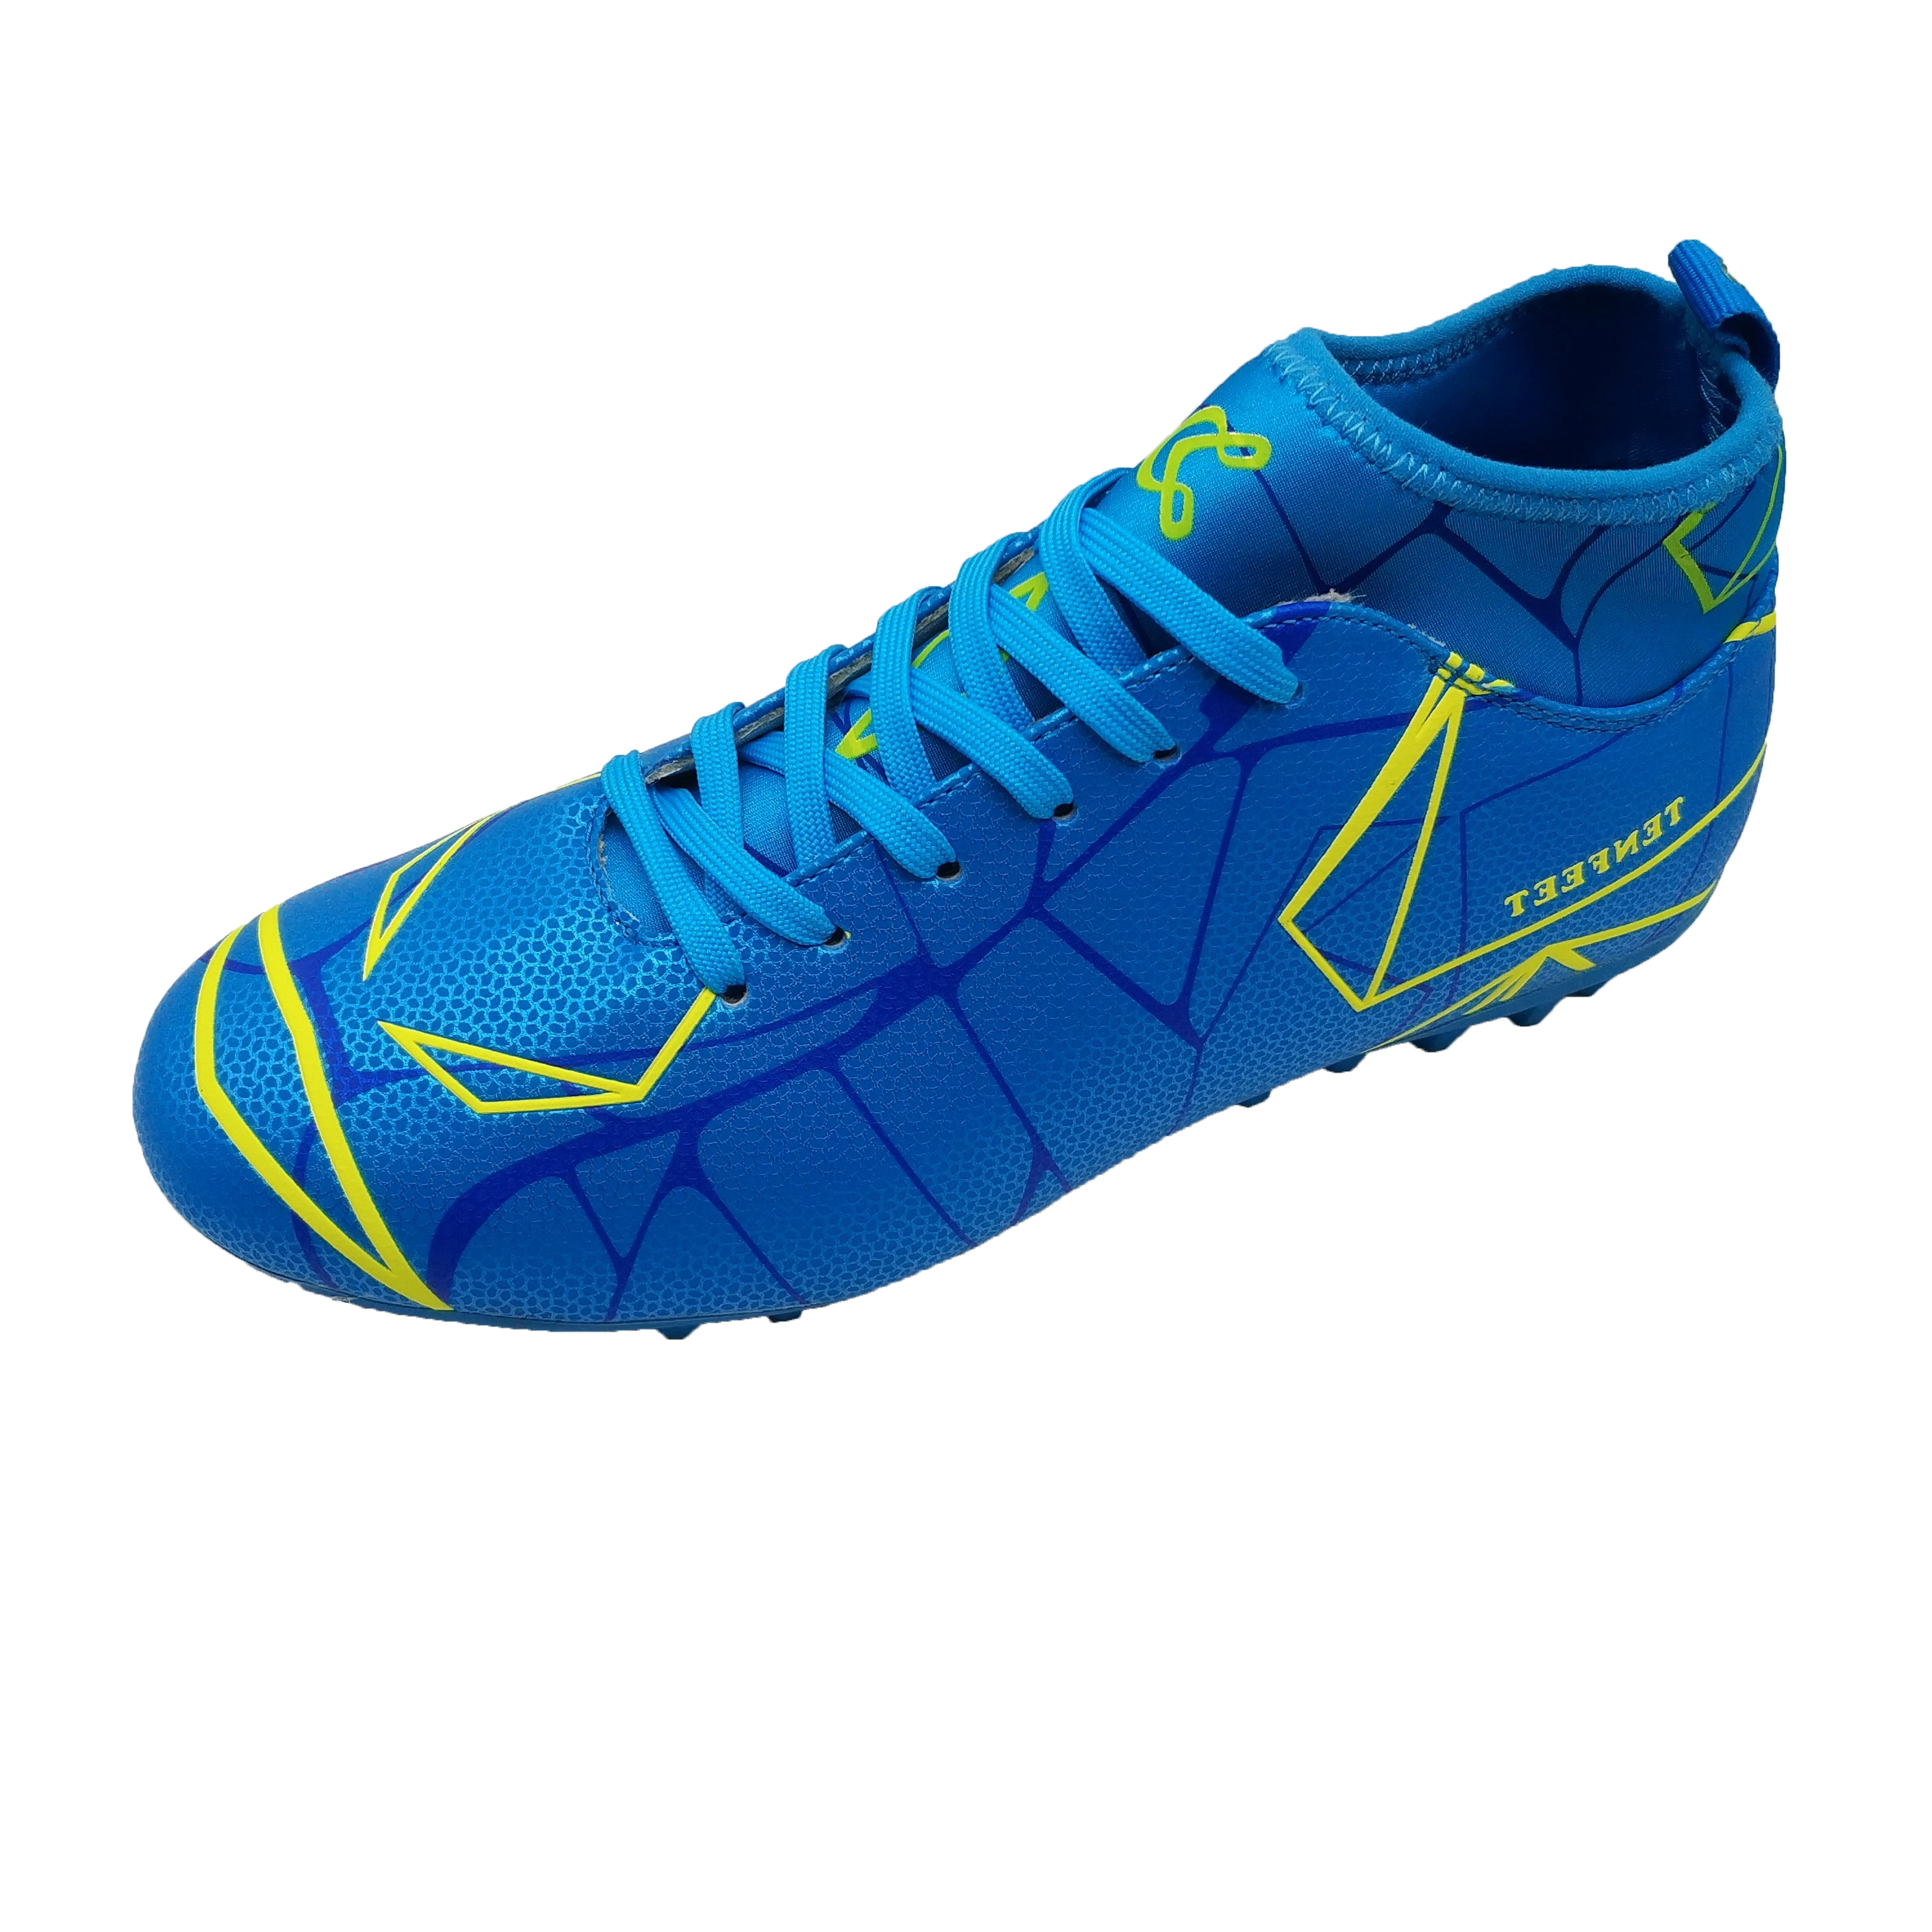 Oem Design Men Chuteira Futebol Boots Cleats Training Soccer Shoes Wholesale